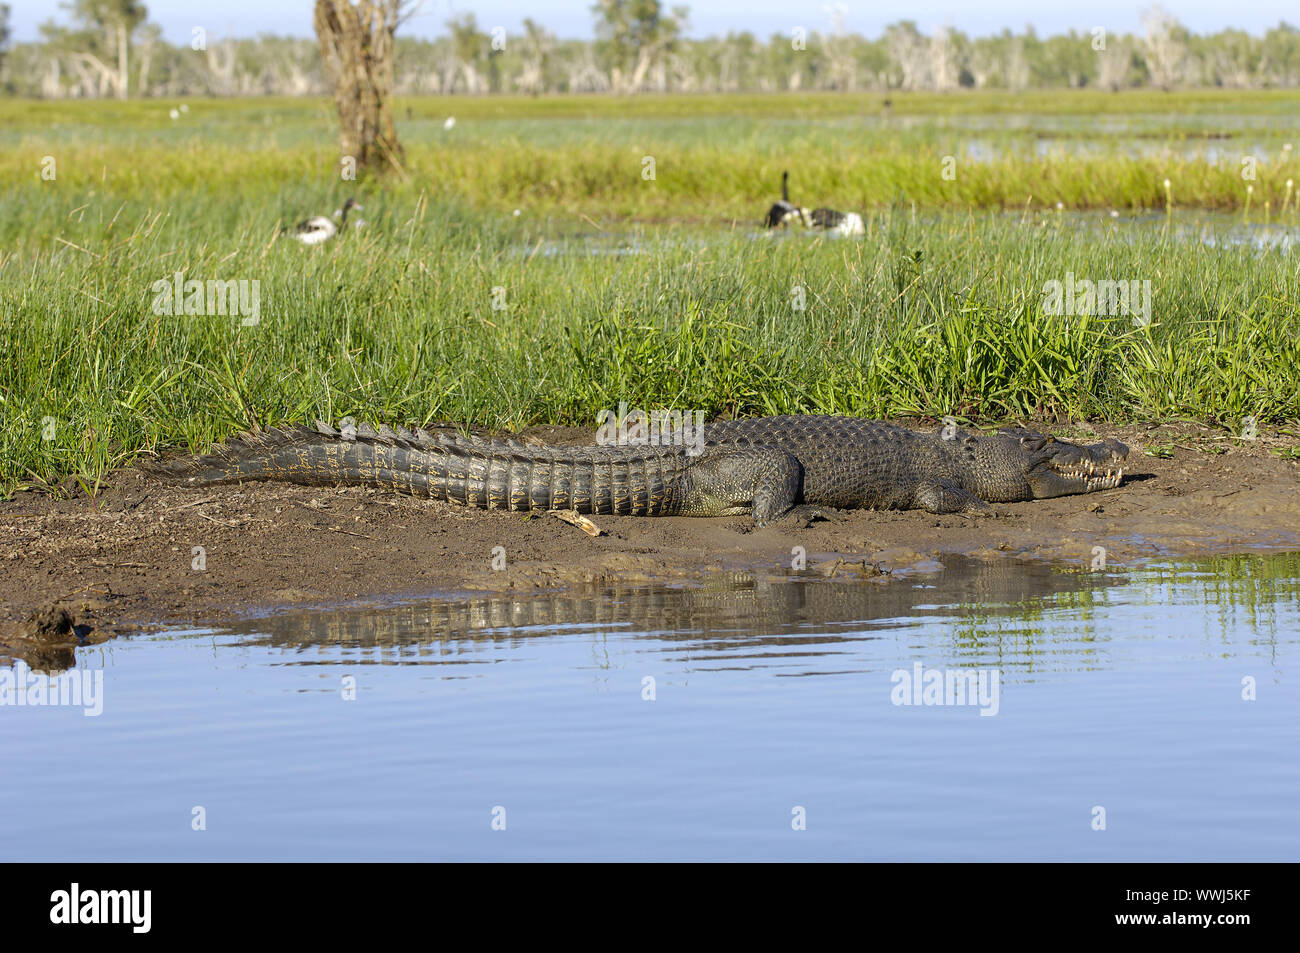 Groin Crocodile, Saltwater Cork Crocodile, Cocodylus porosus, Kakadu NP Northern Territory, Australia Stock Photo